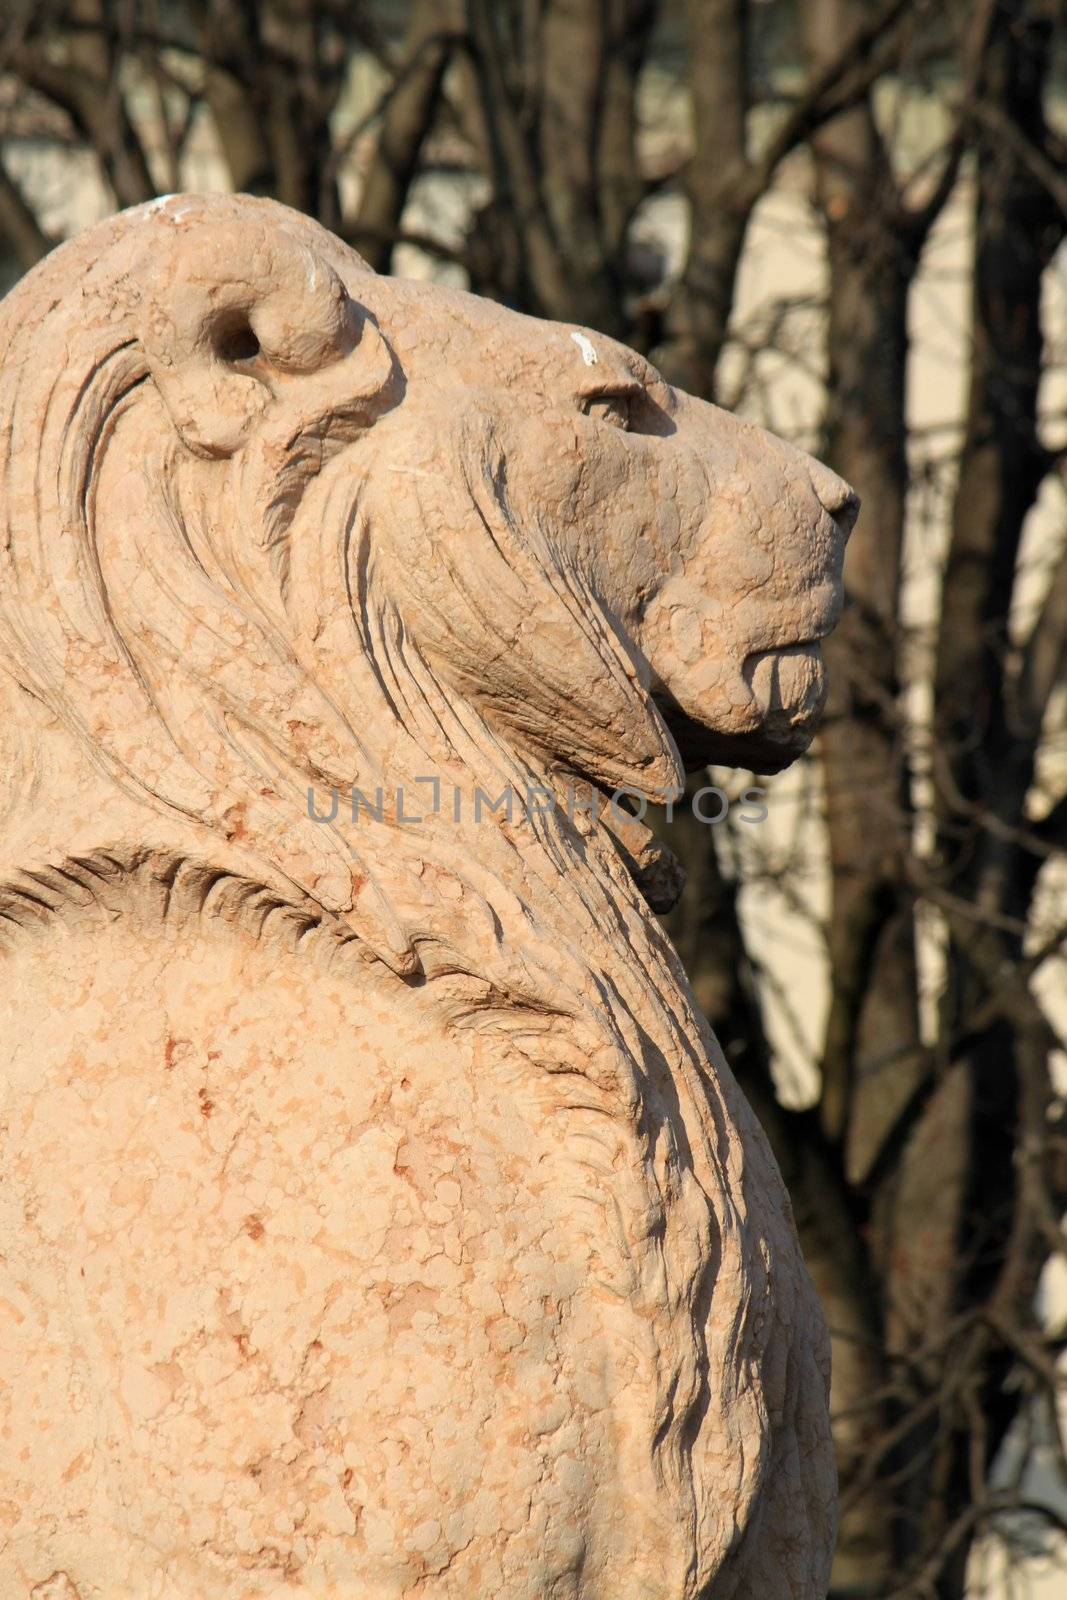 Lion guarding Brunswick monument, Alps garden, Geneva, Switzerla by Elenaphotos21